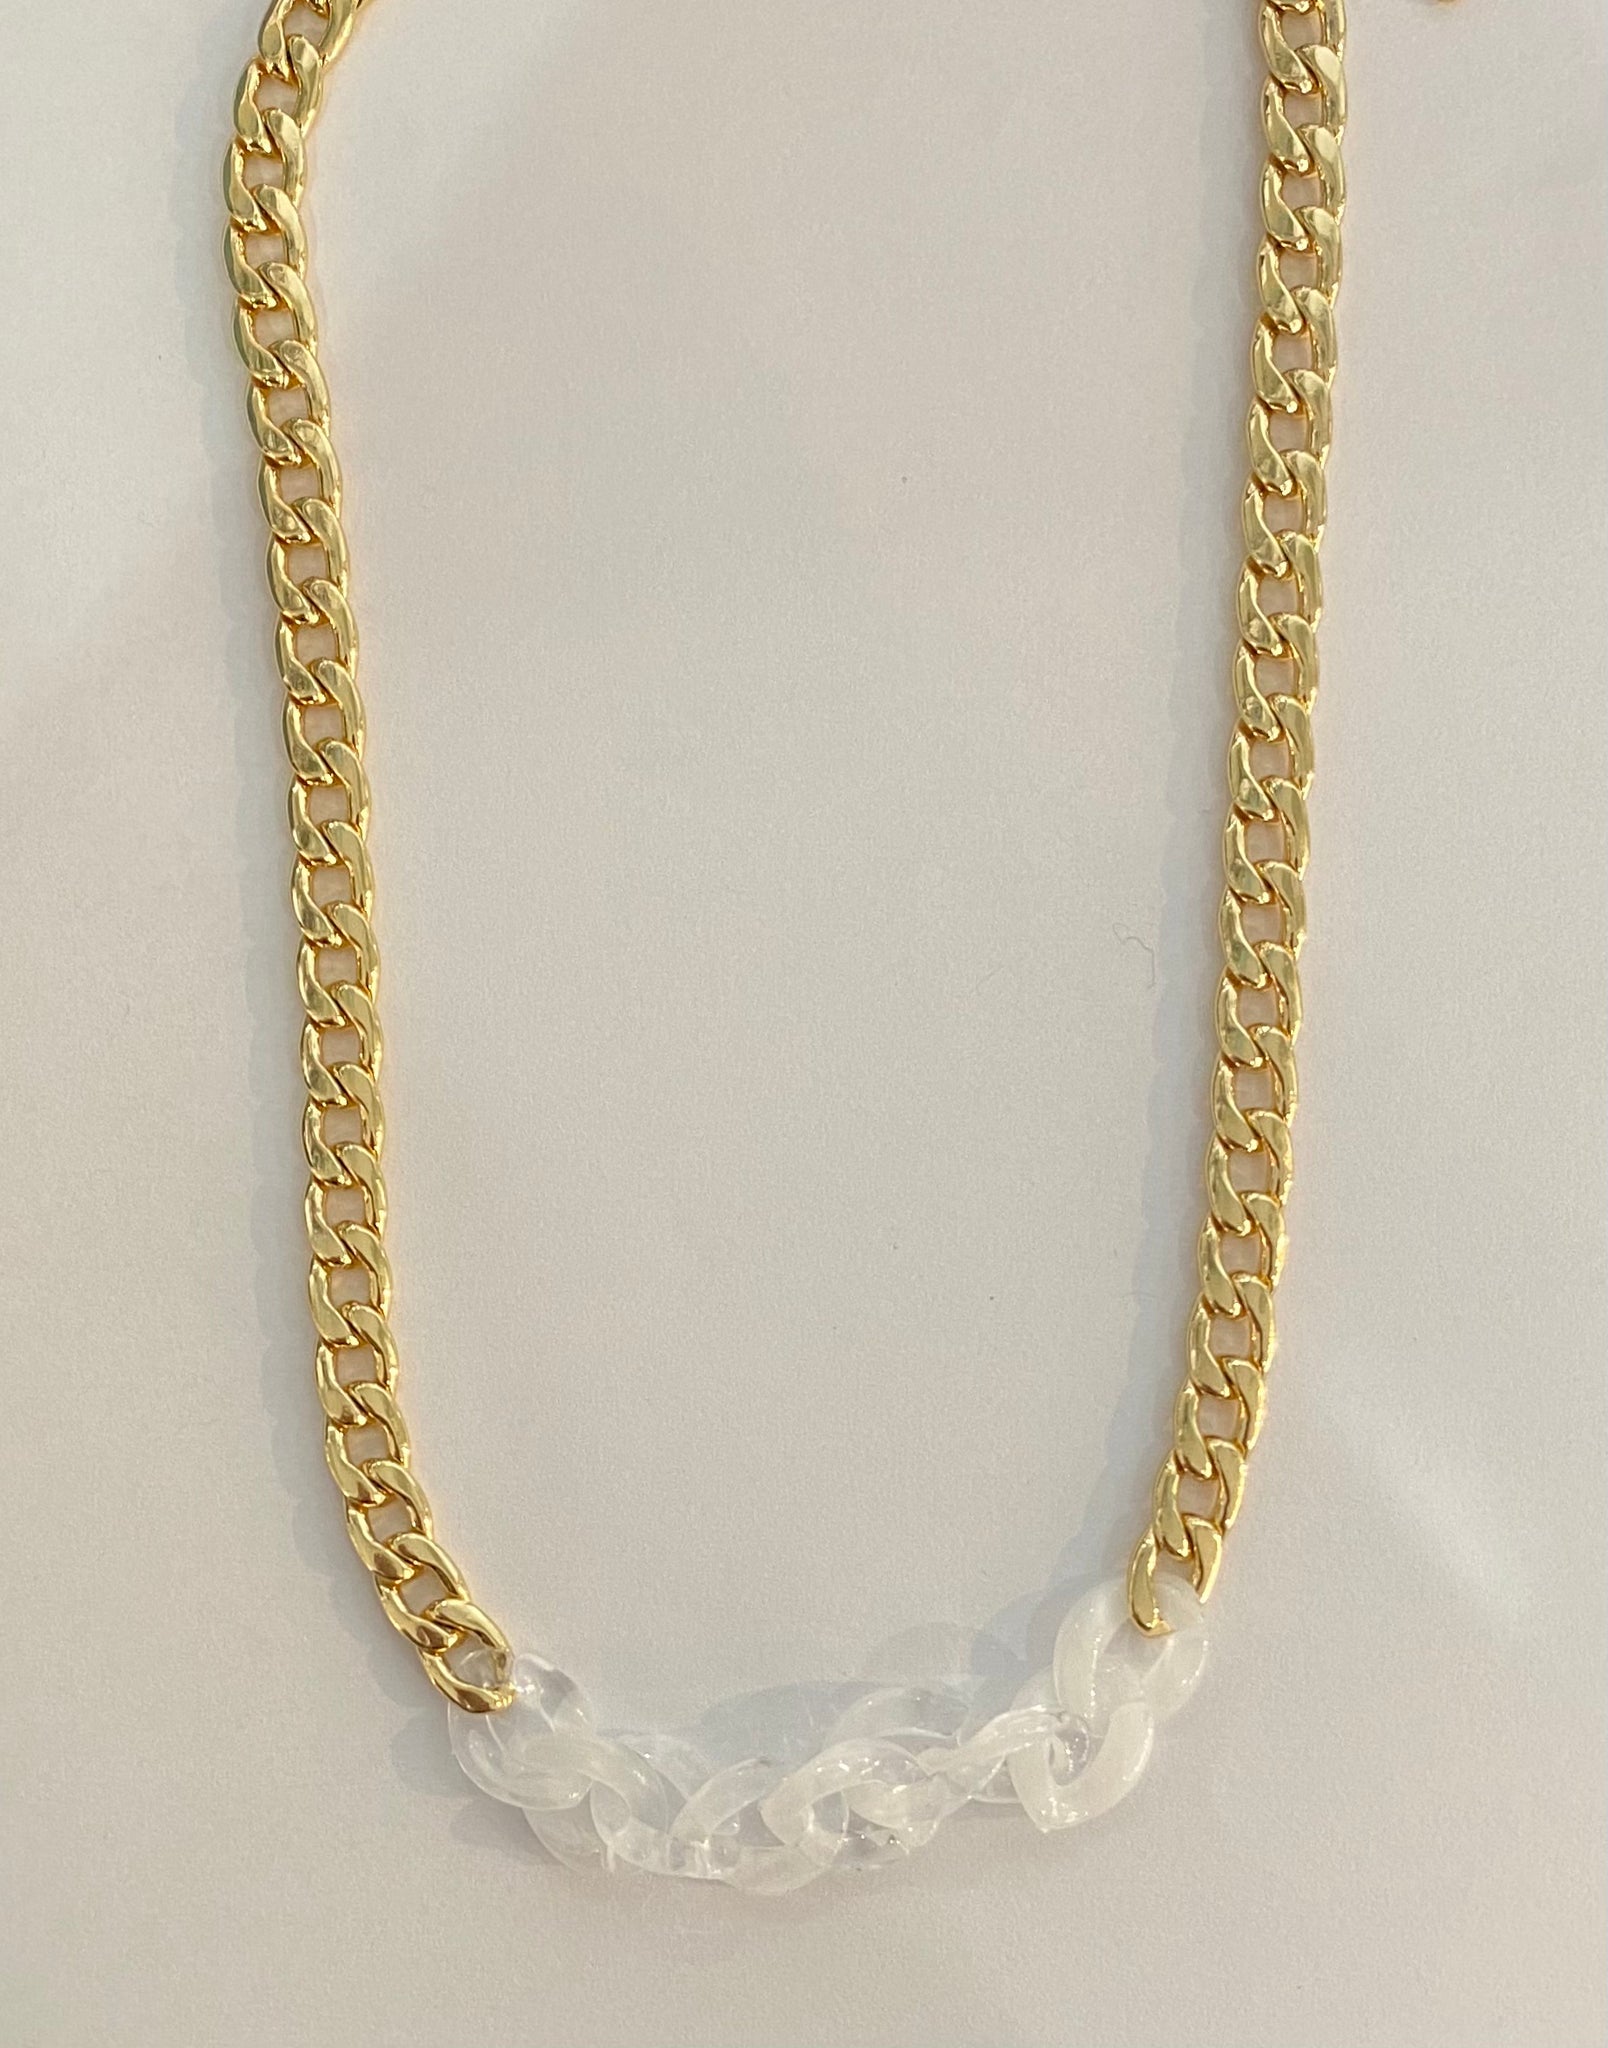 Nicole Chain Necklace